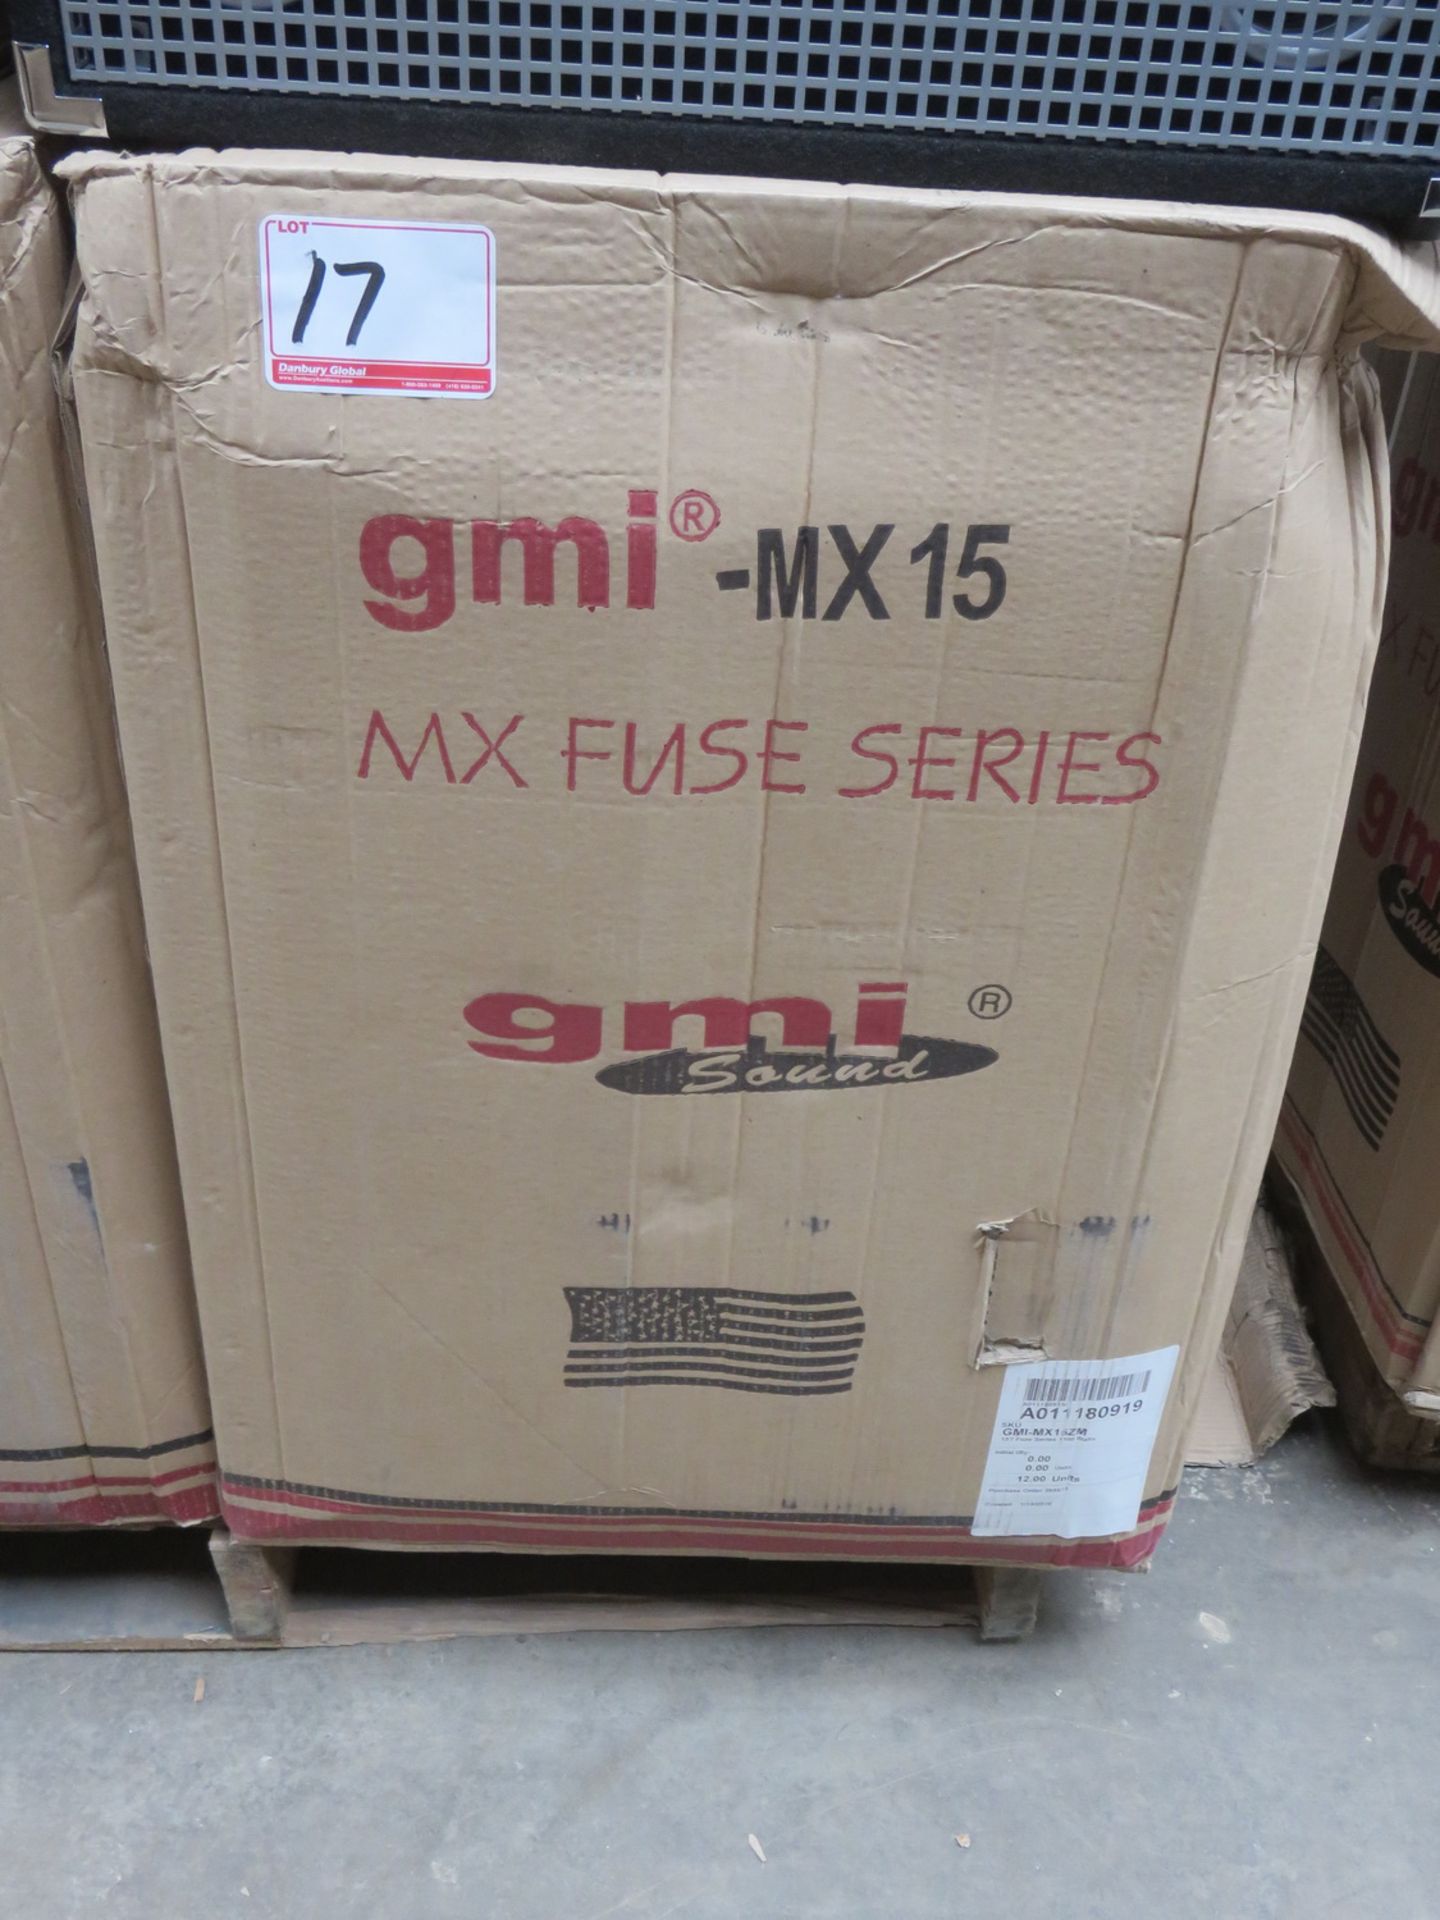 UNITS - GMI MOD MX15, MX FUSE SERIES FULL RANGE 15" LOUDSPEAKERS (IN BOXES) - Image 4 of 4